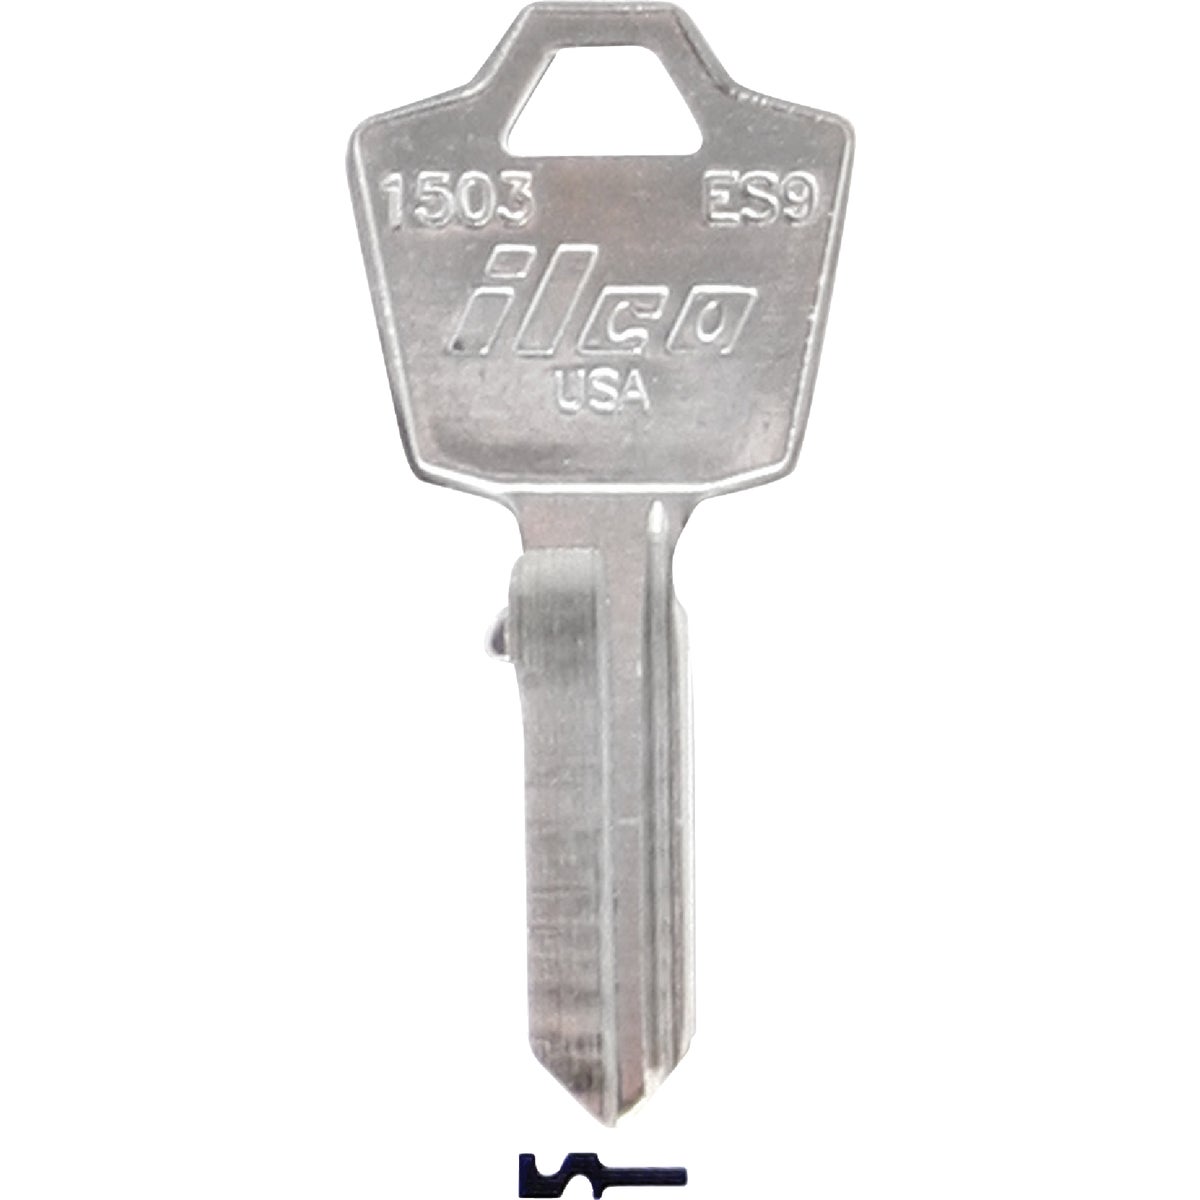 ILCO ESP Nickel Plated Mailbox Key, 1503 (10-Pack)